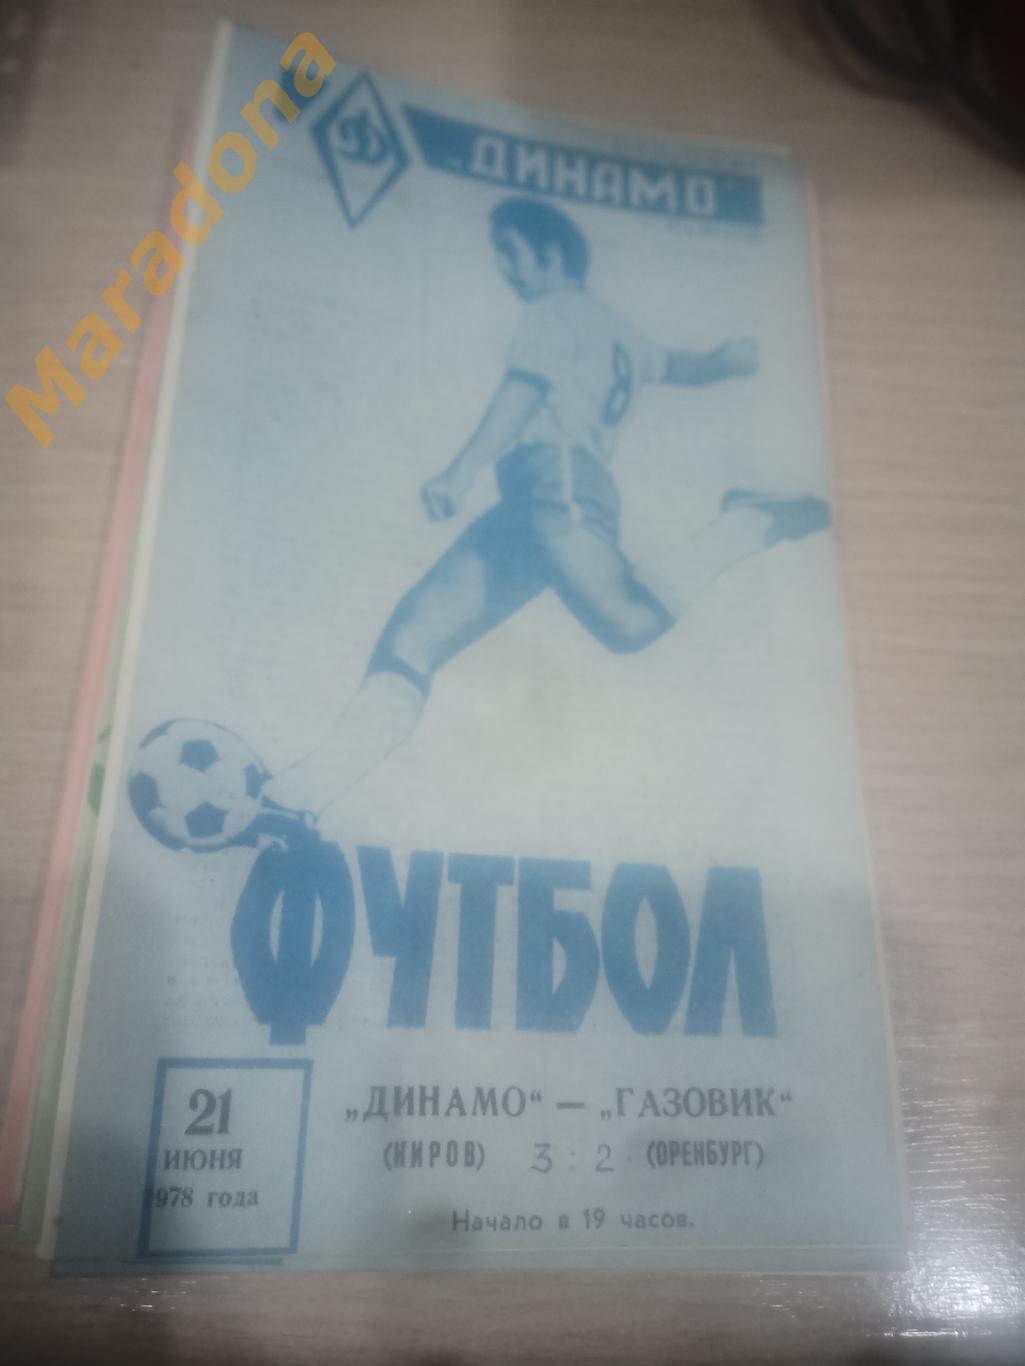 Динамо Киров - Газовик Оренбург 1978